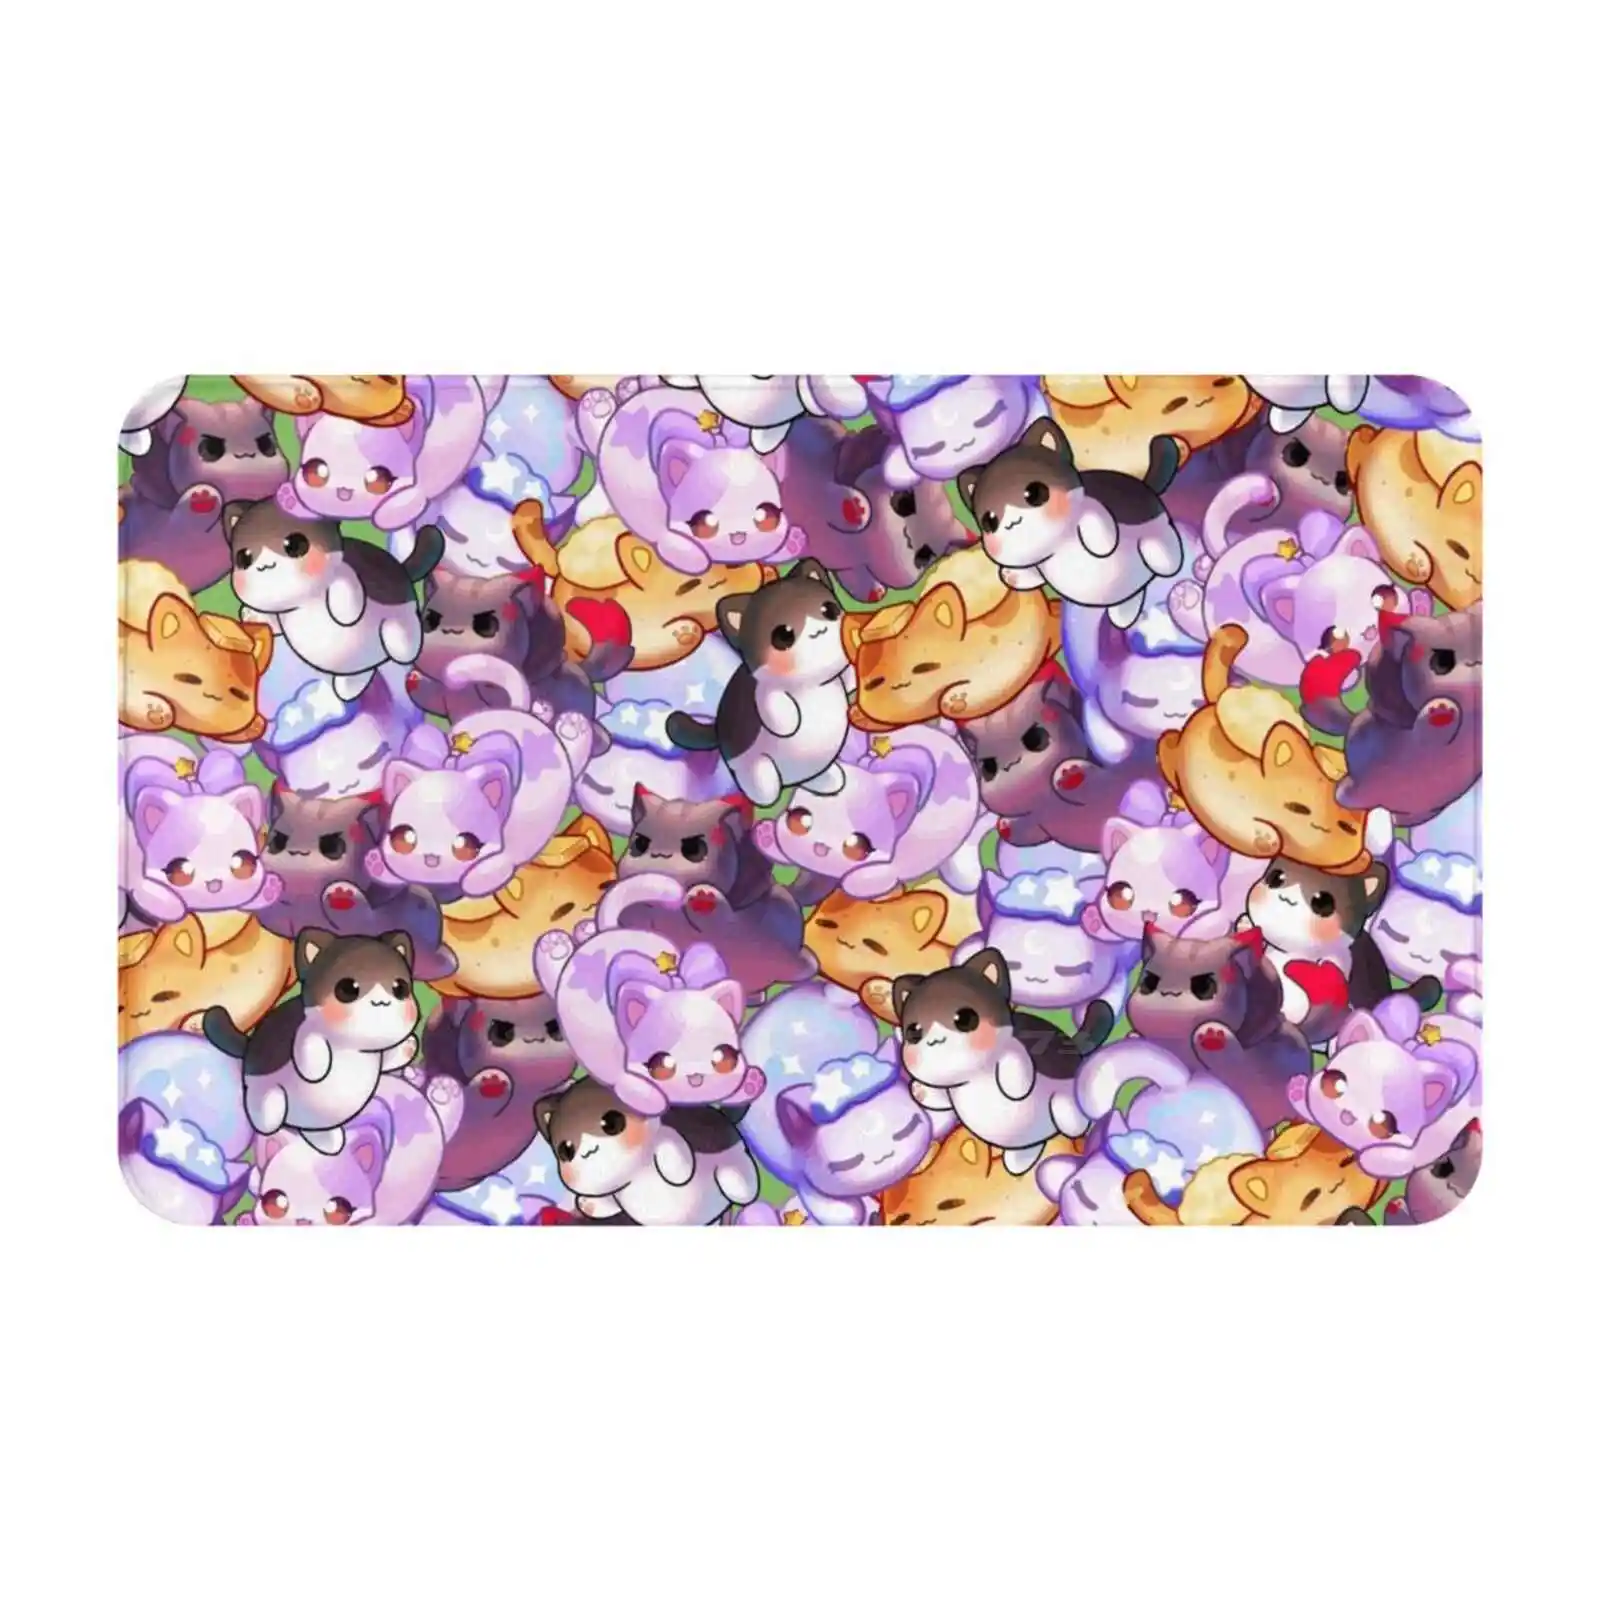 Aphmau Meow Plushies Anime Cats Soft Foot Pad Room Goods Rug Carpet Aphmau Gaming Aphmau Youtube Aphmau Cats Plushies Aphmau